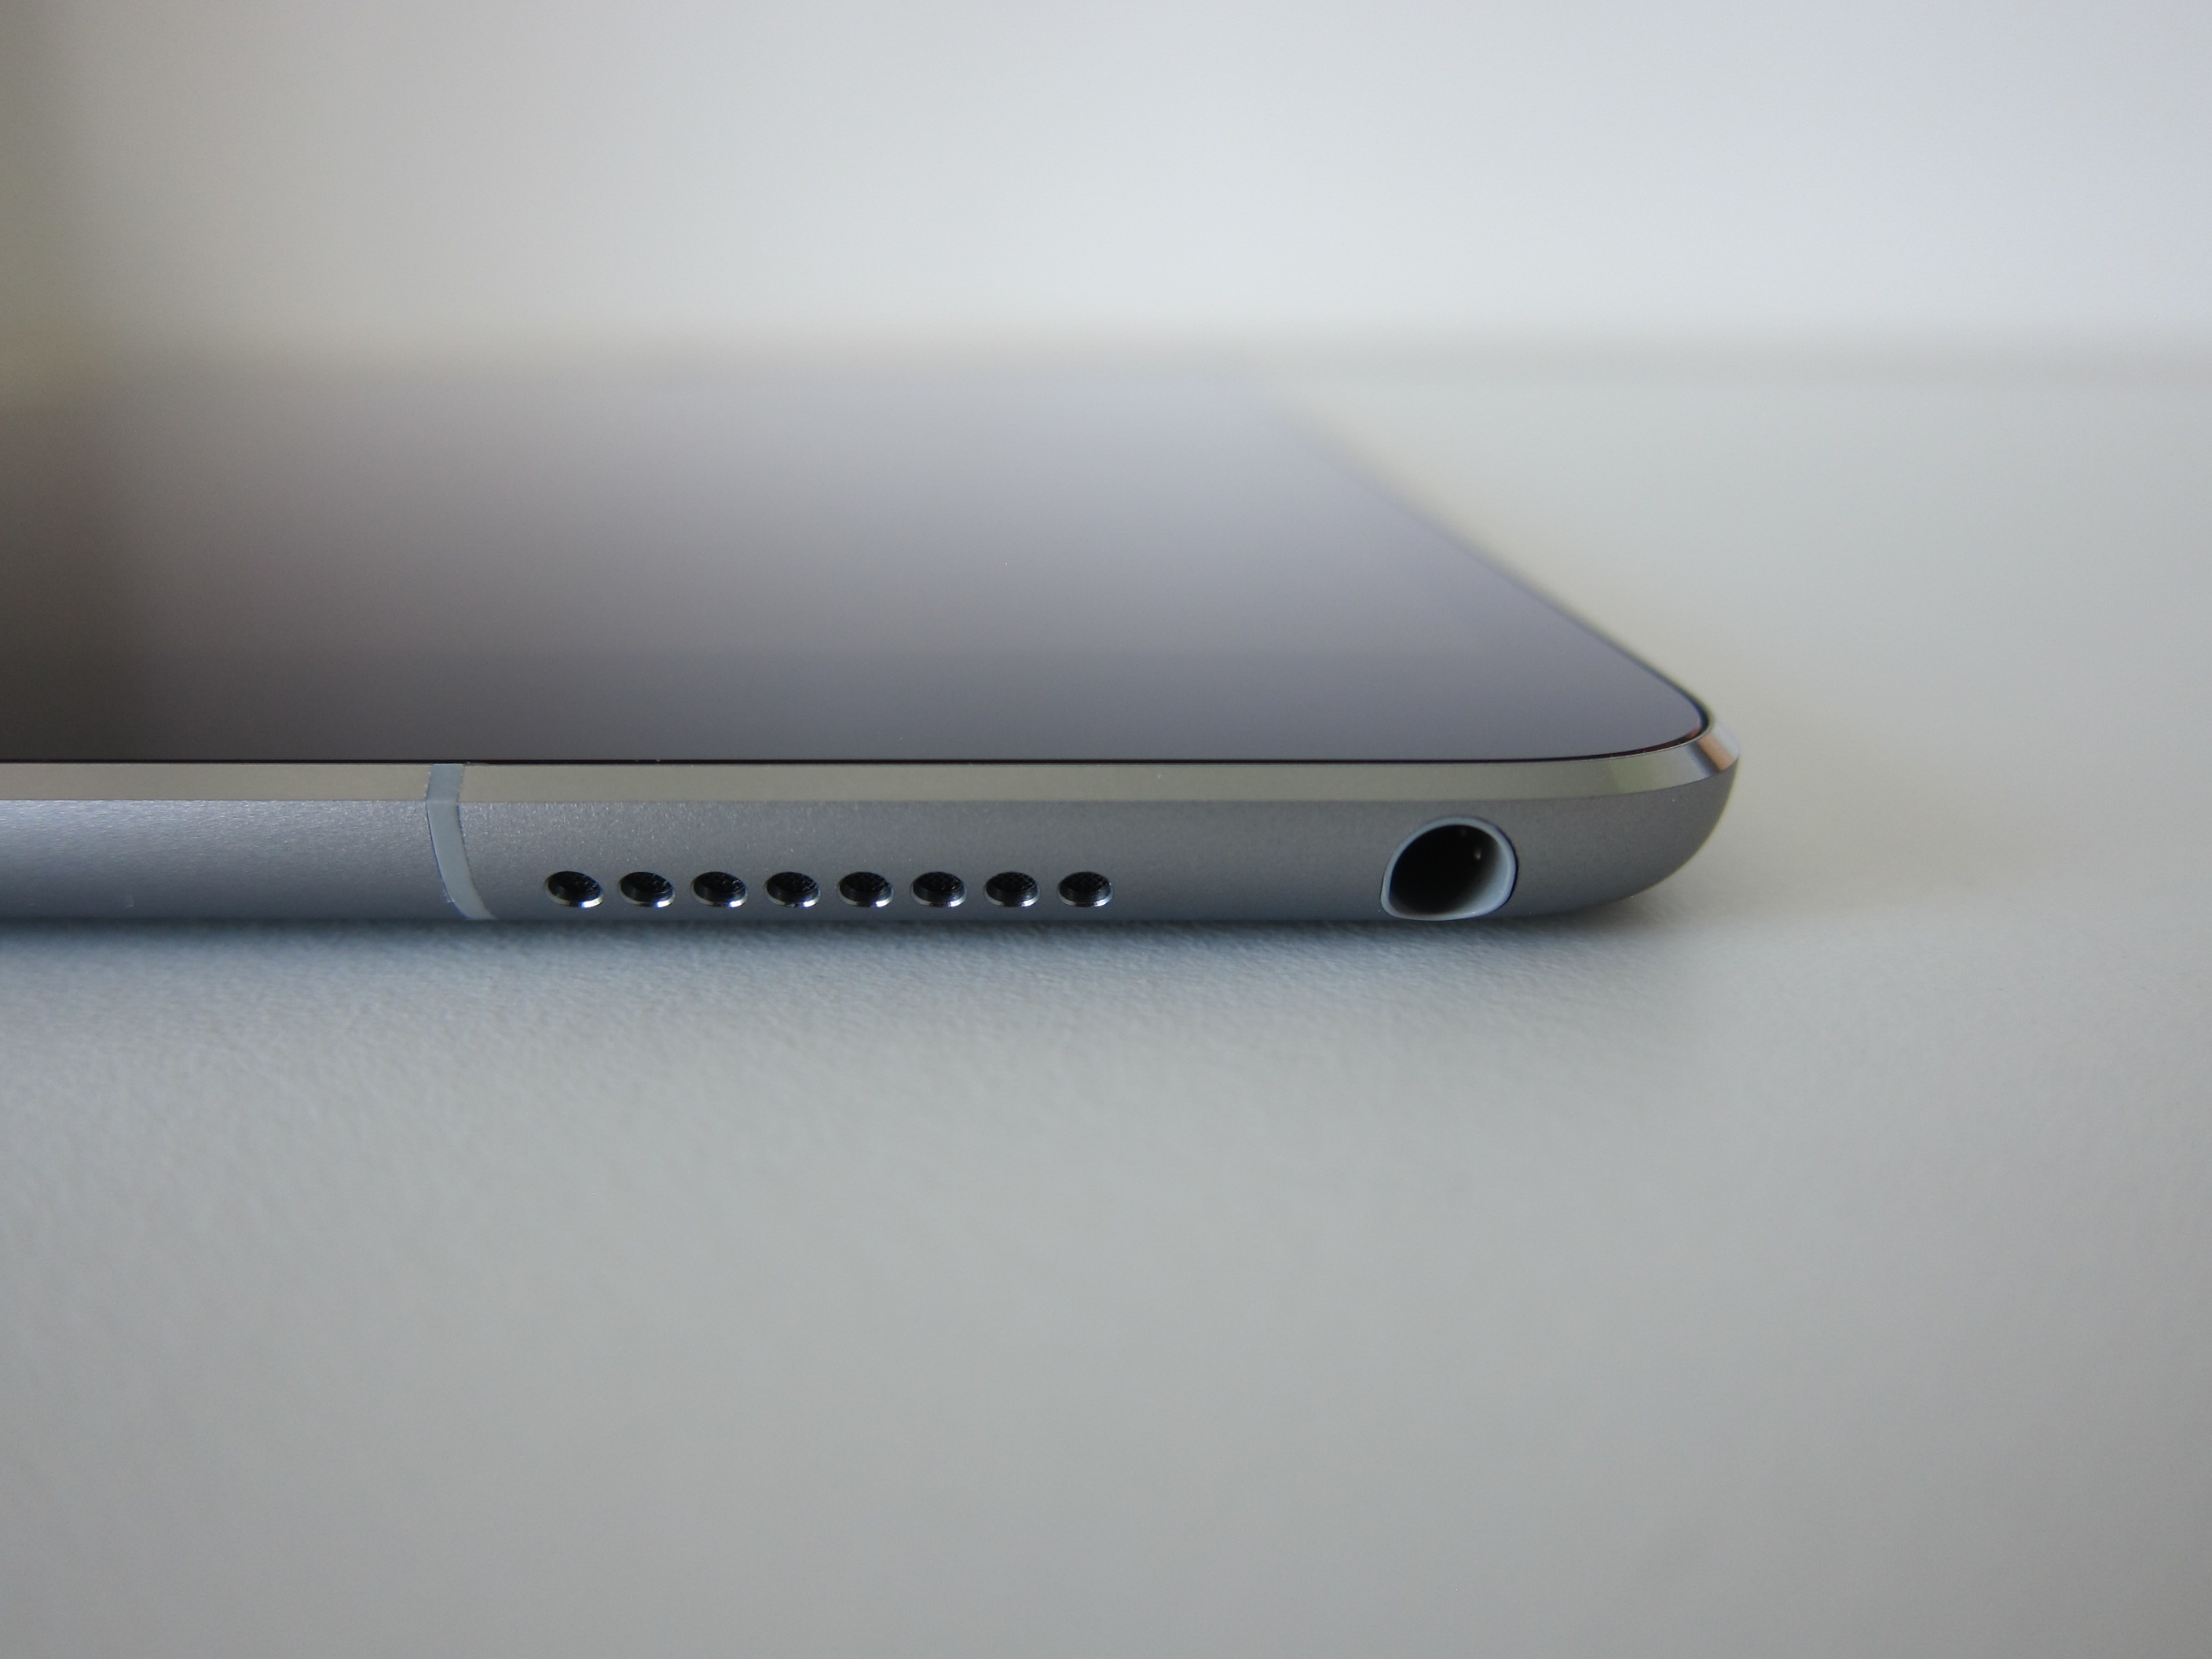 Apple iPad Pro 10.5″ (Space Grey 256GB) (Wi-Fi + Cellular) « Blog